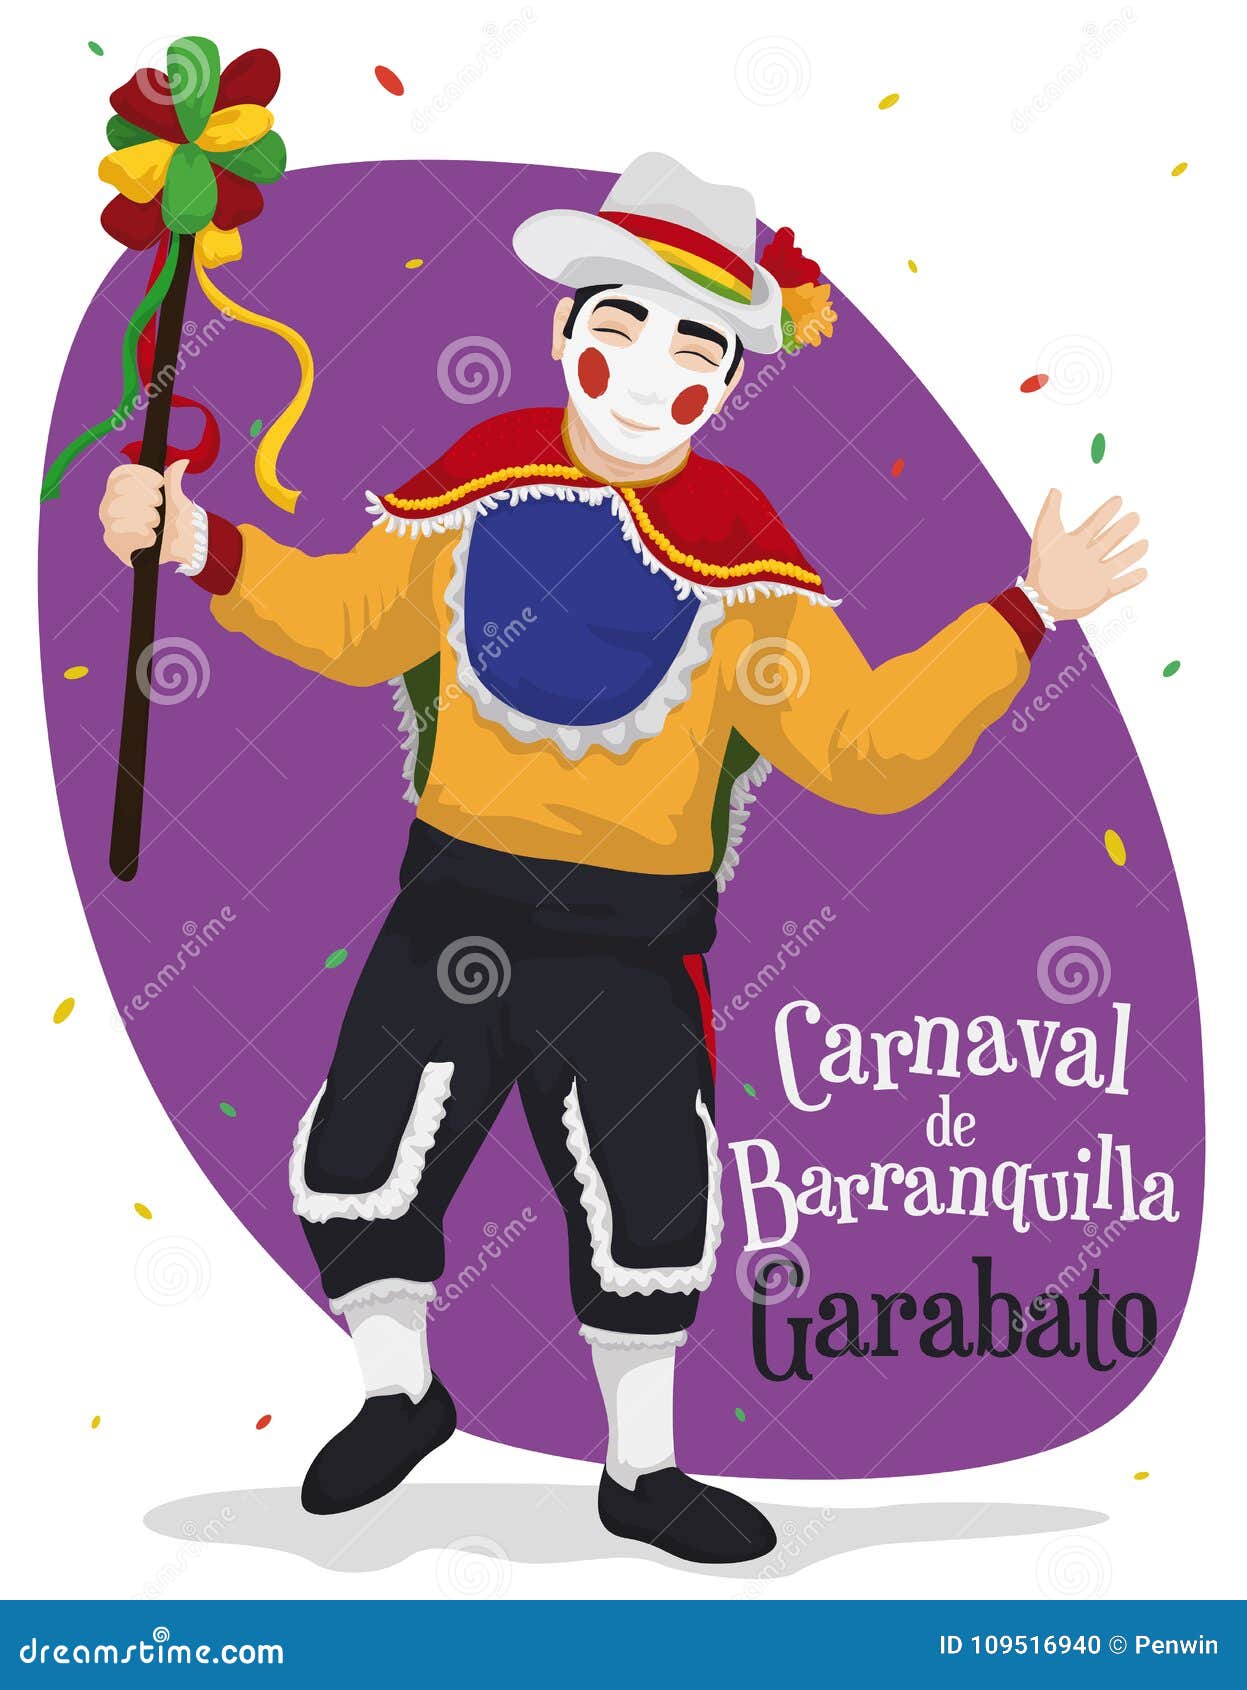 traditional garabato character ready to celebrate barranquilla`s carnival,  